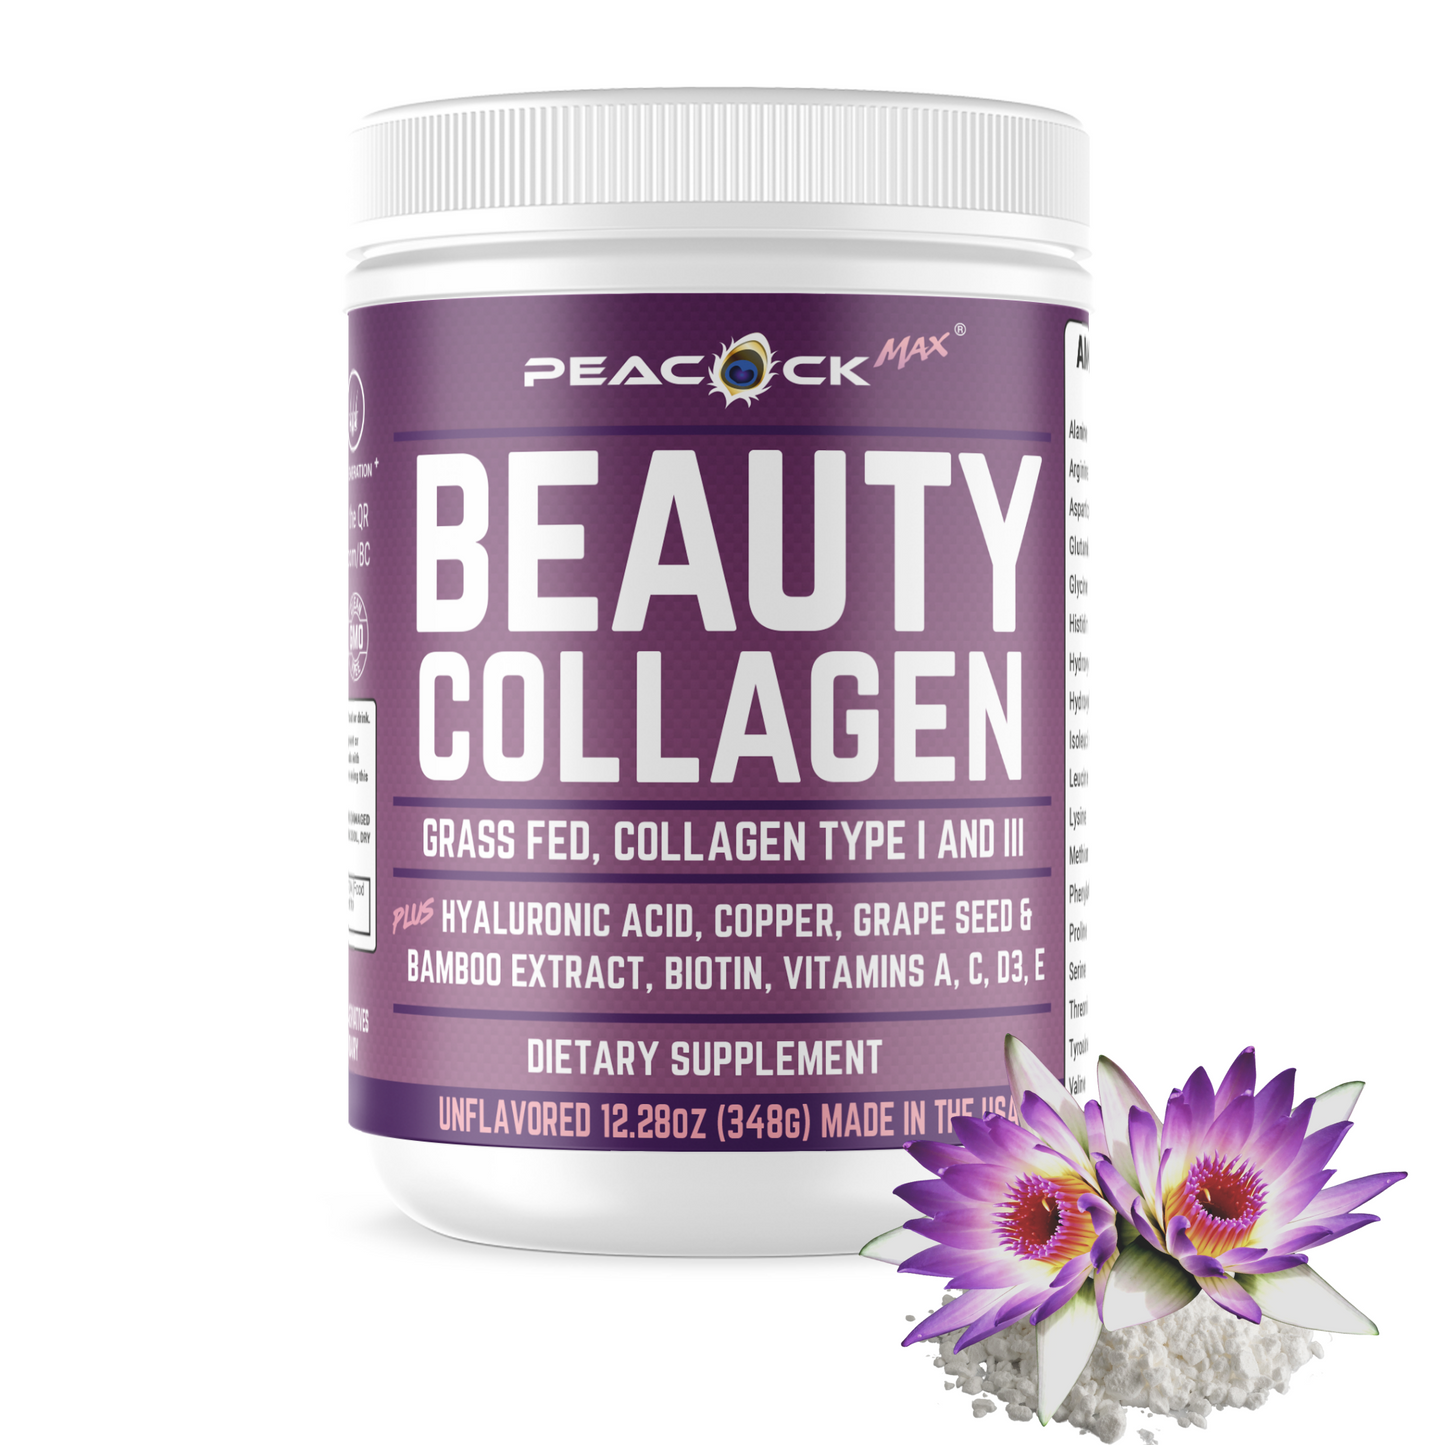 Beauty Collagen